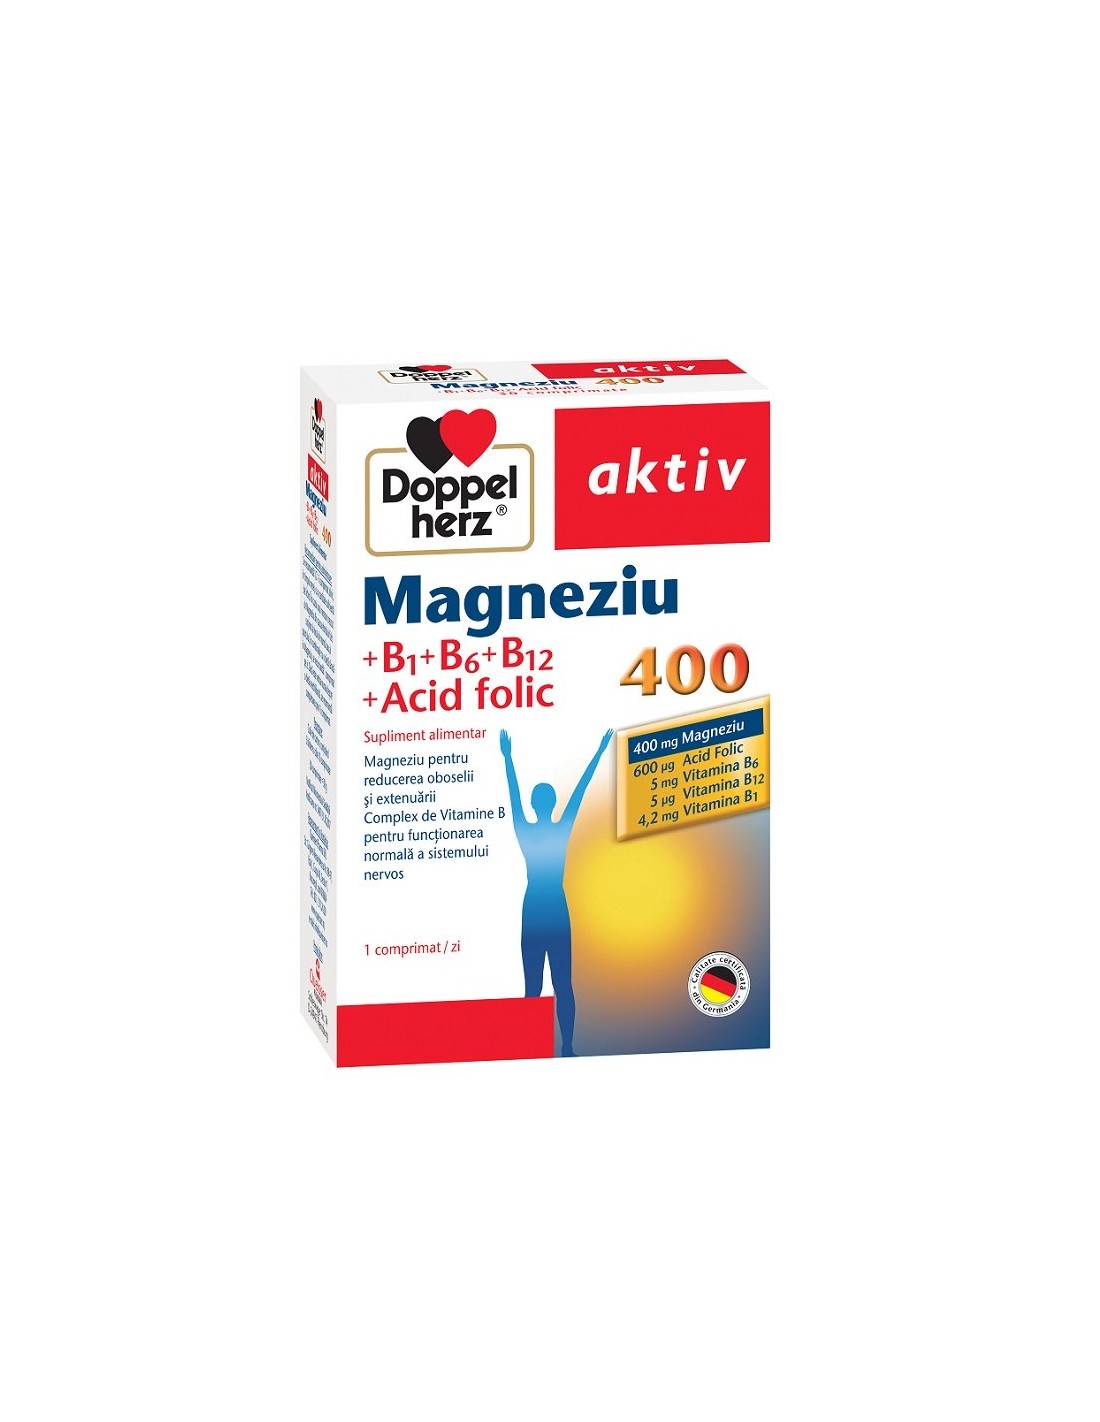 Magnesium 400+Acid folic+Vitamina B1+B6+B12, 30 comprimate, Doppelherz -  UZ-GENERAL - DOPPELHERZ